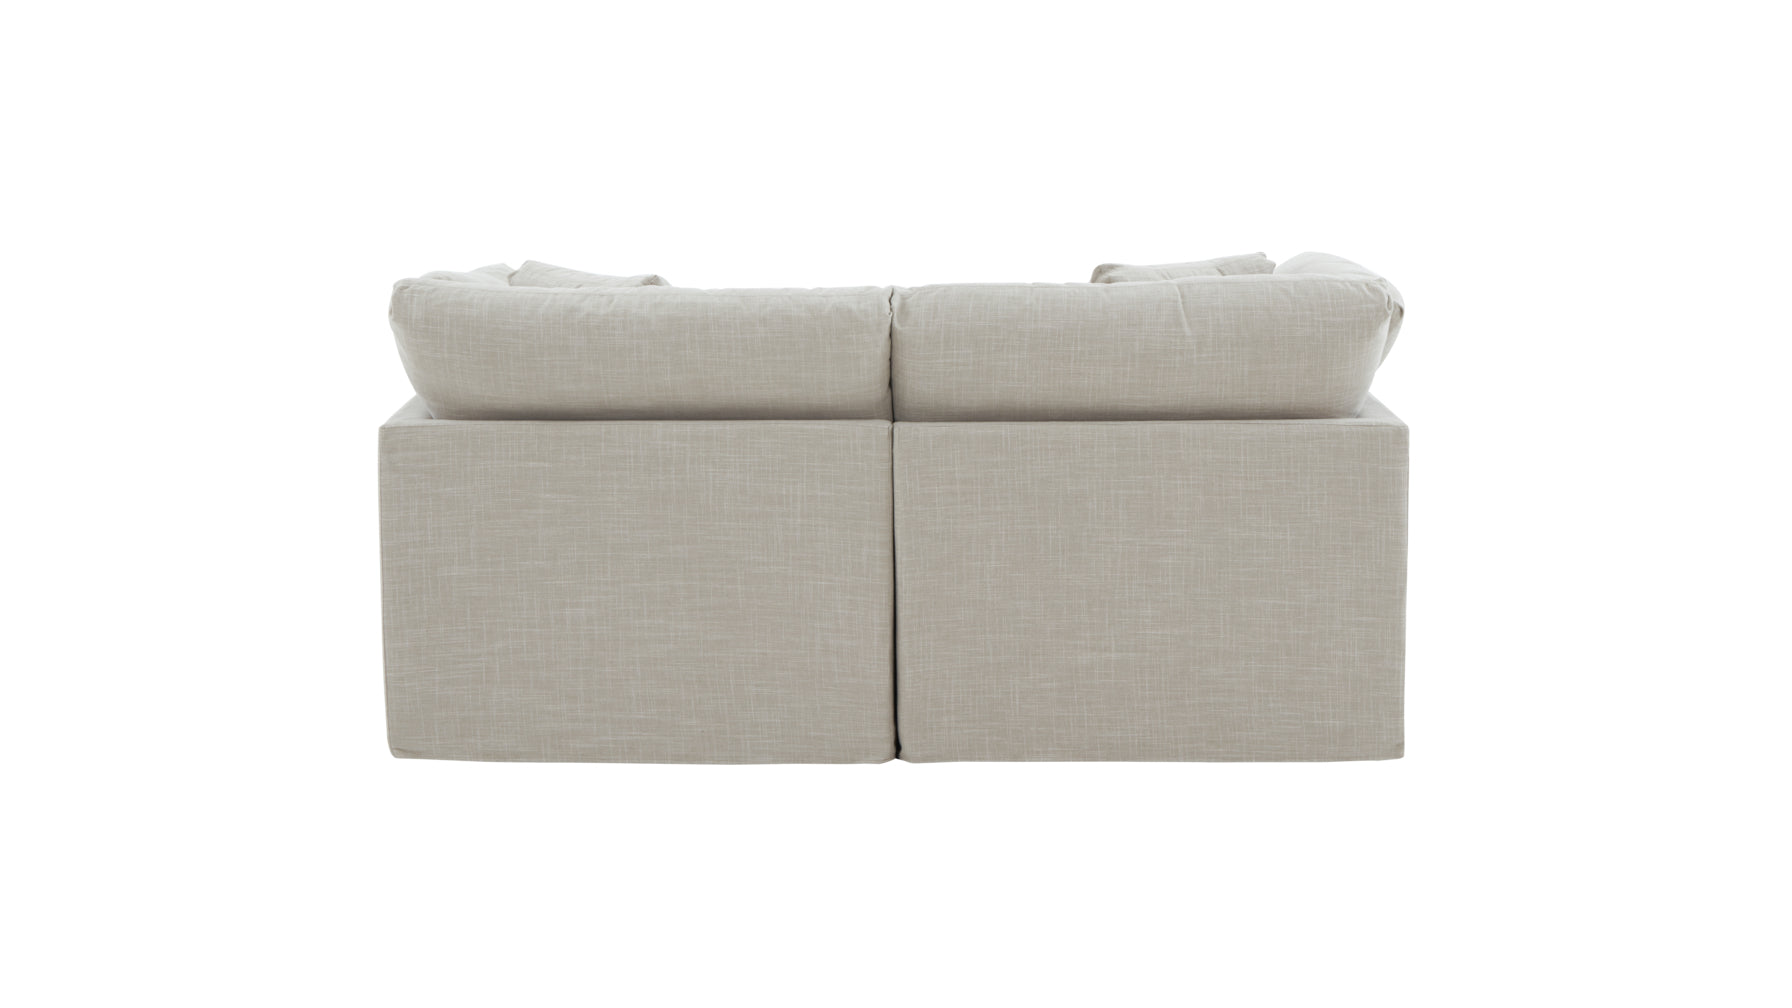 Get Together™ 2-Piece Modular Sofa, Standard, Light Pebble - Image 7